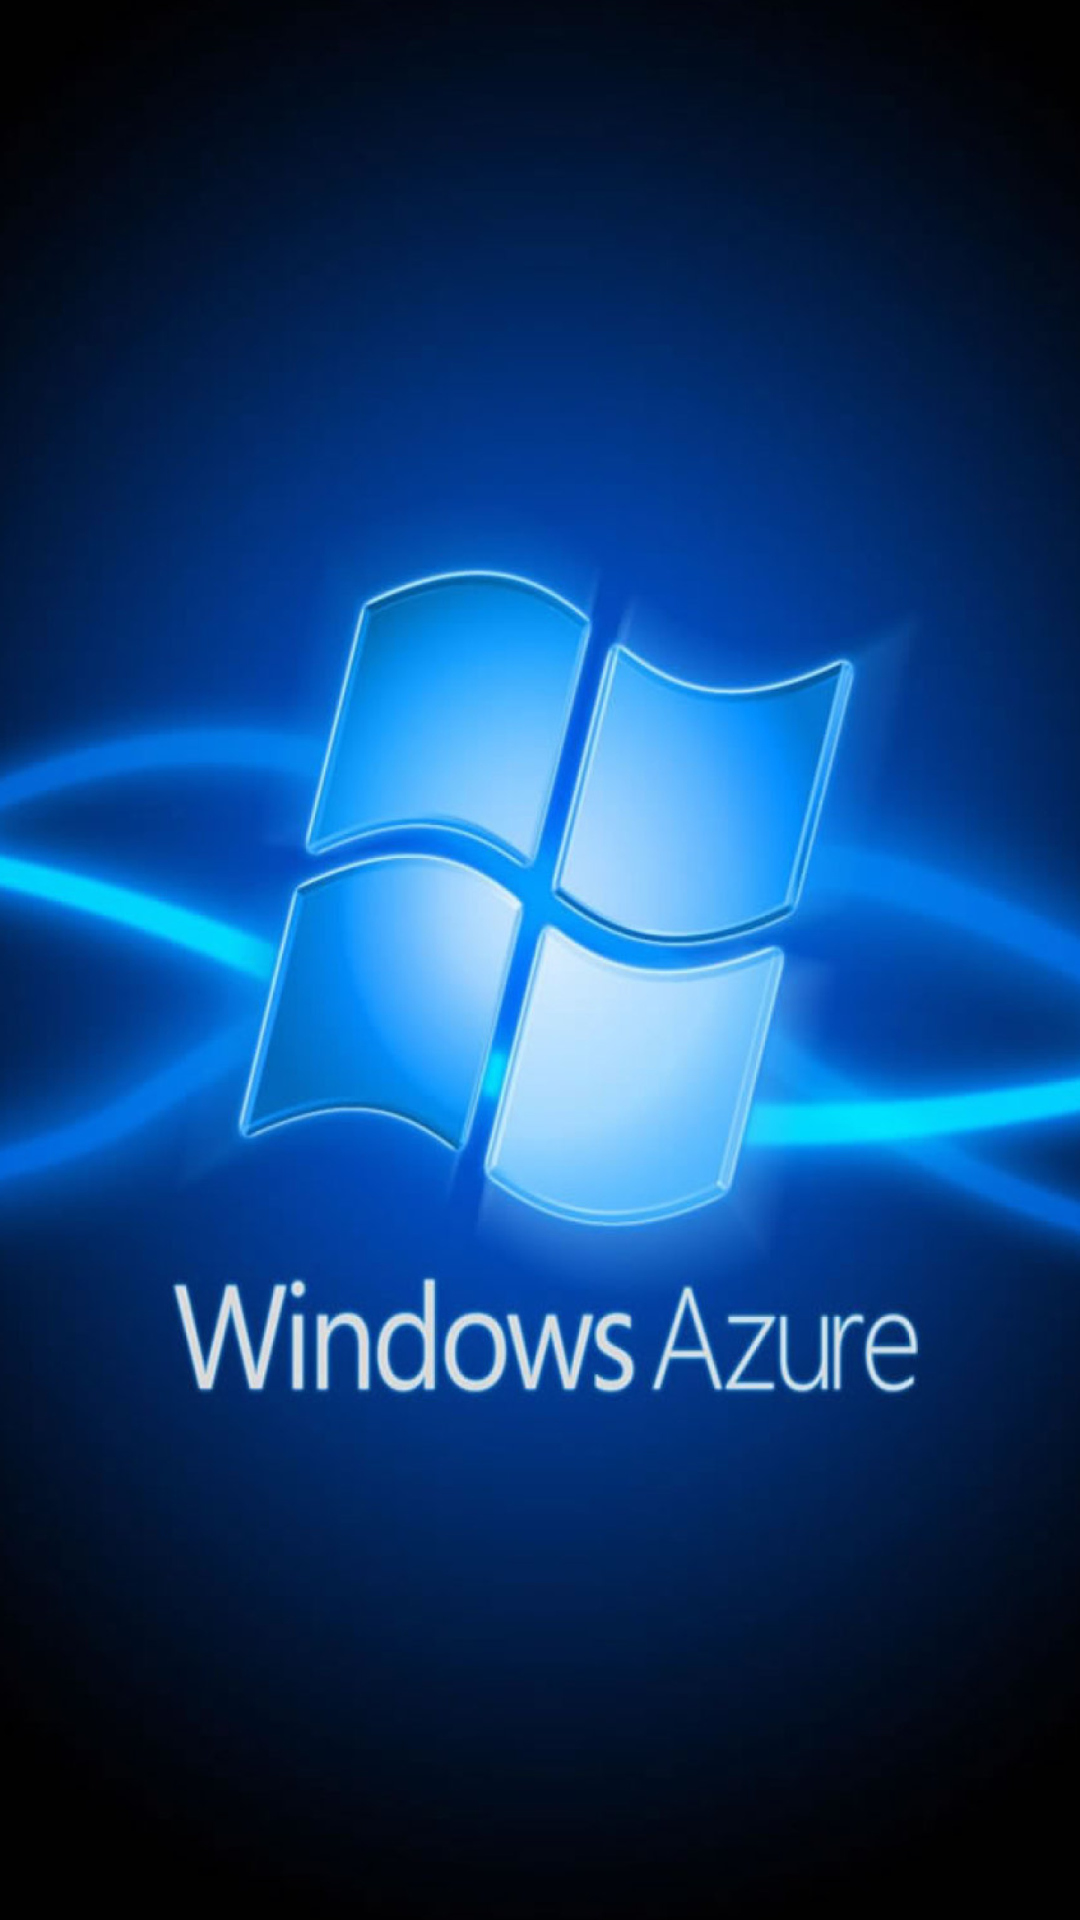 Windows Azure Xtreme wallpaper 1080x1920